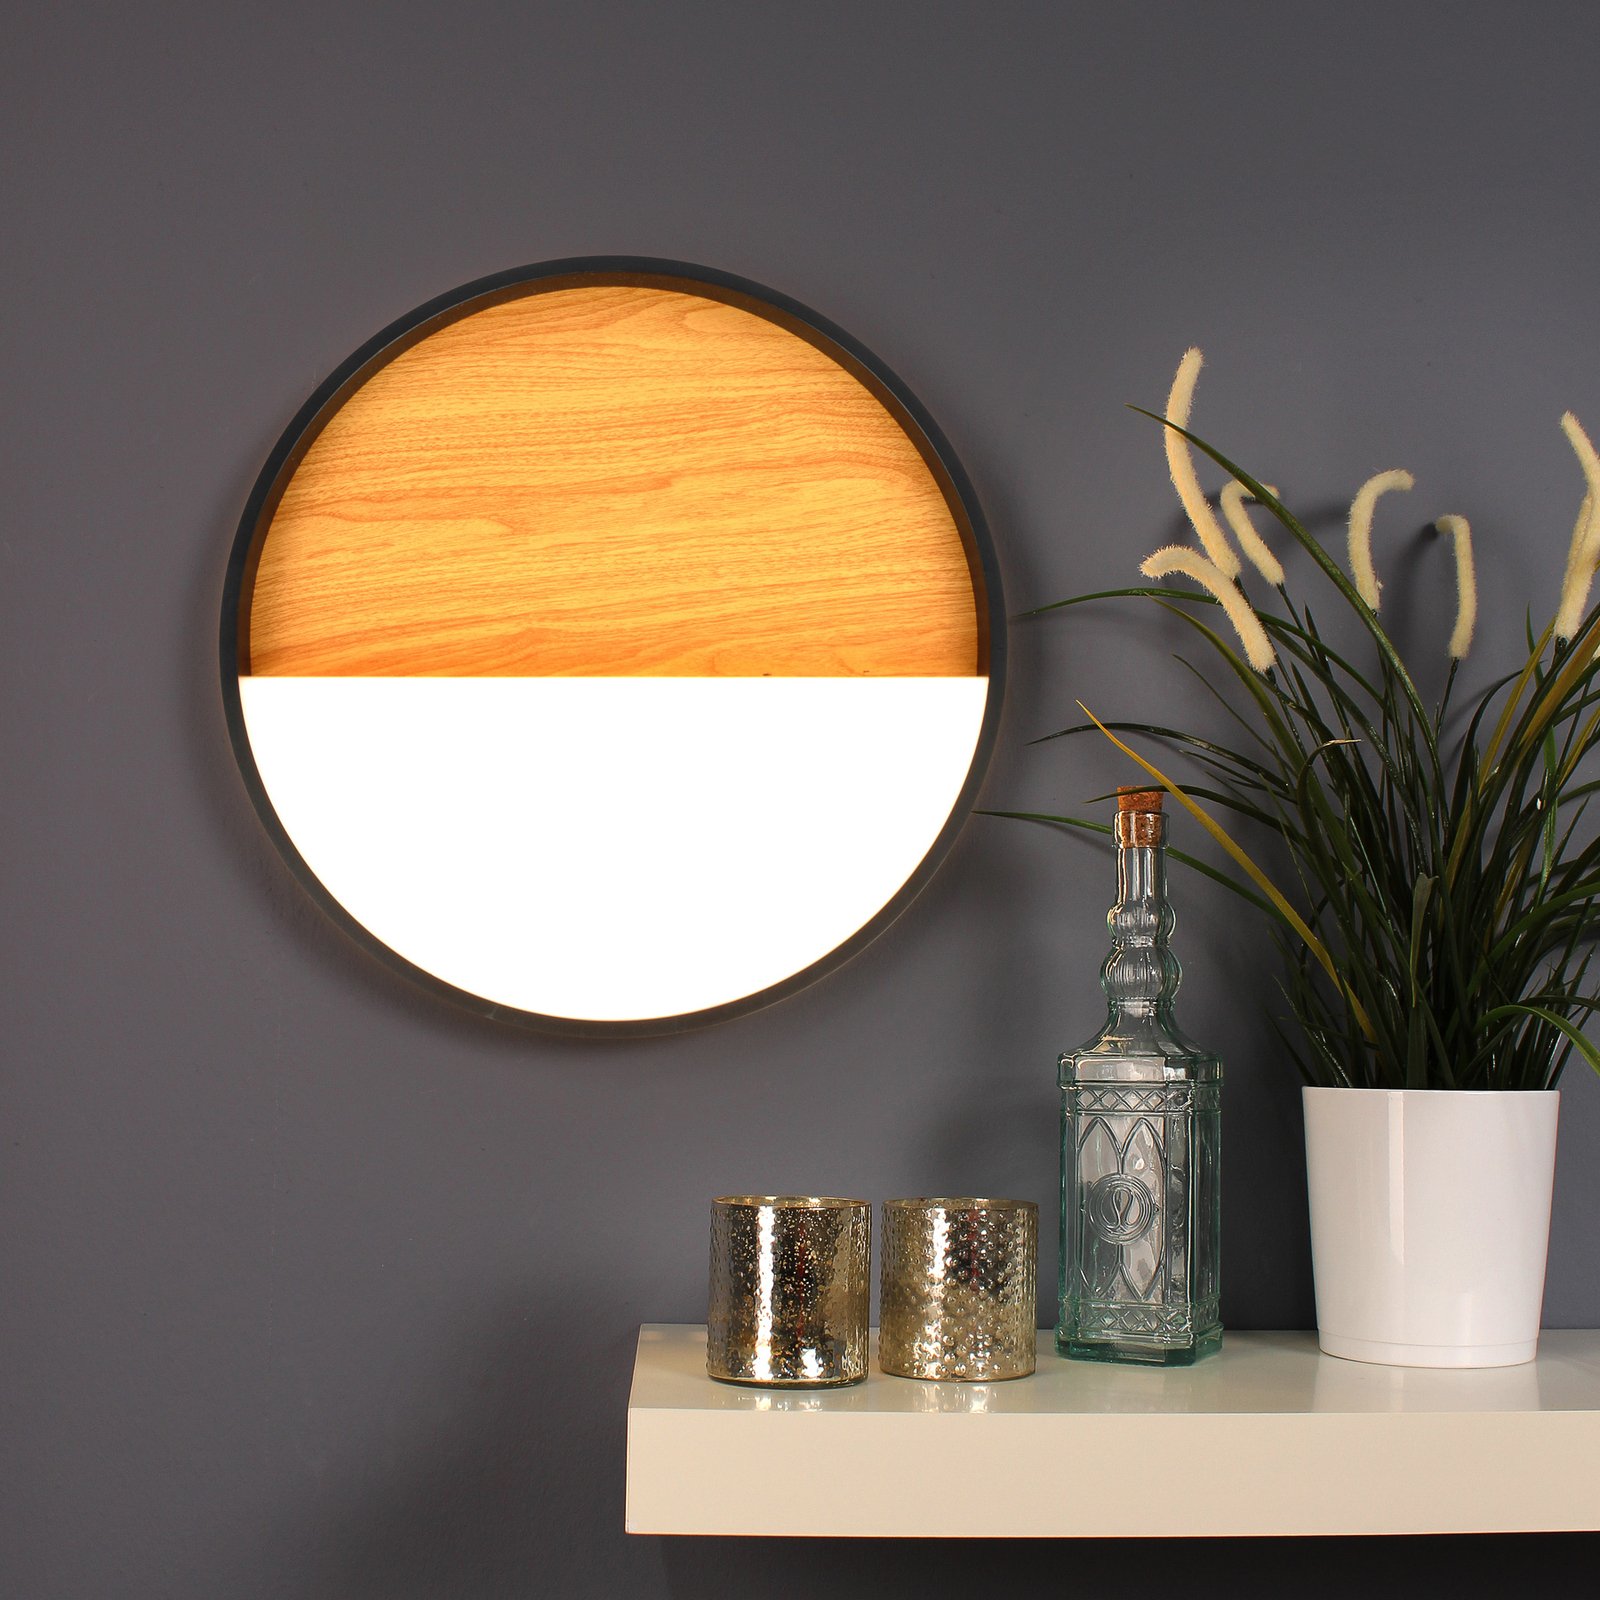 LED wall light Vista, light wood/black, Ø 30 cm